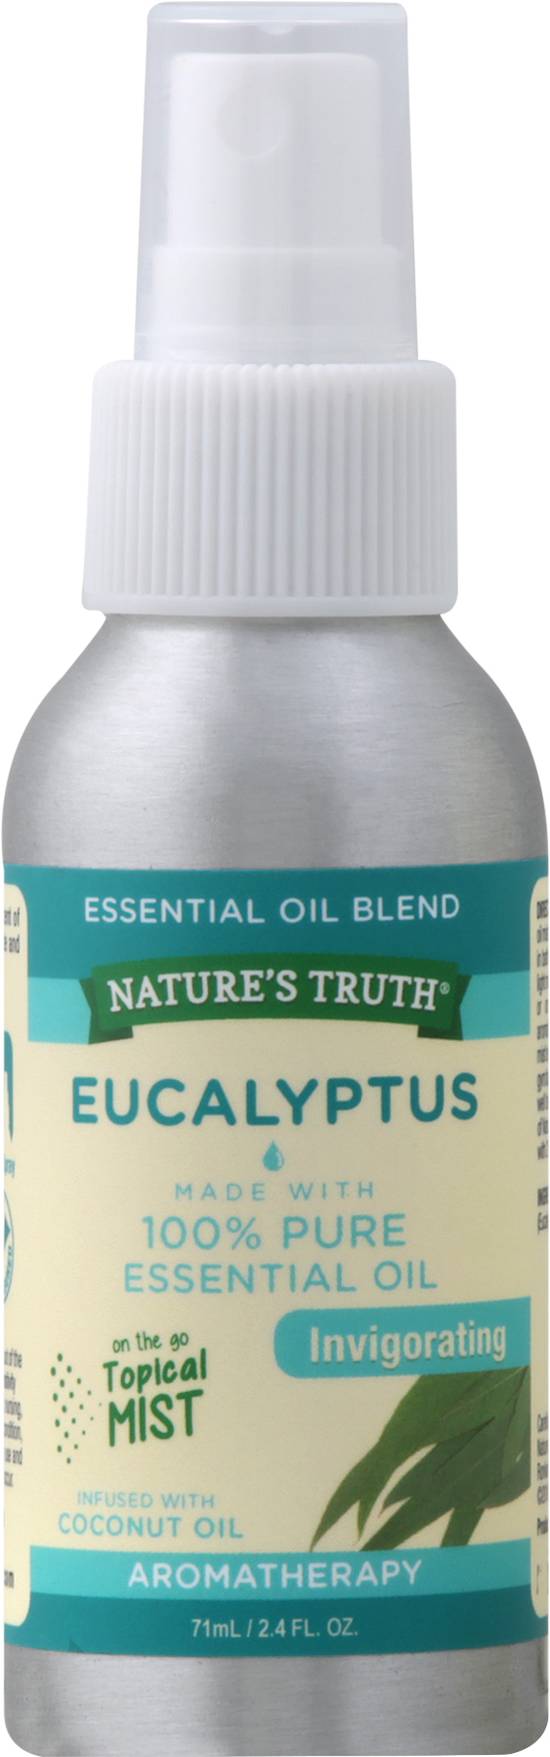 Nature's Truth Eucalyptus Invigorating Essential Oil Blend (2.4 fl oz)